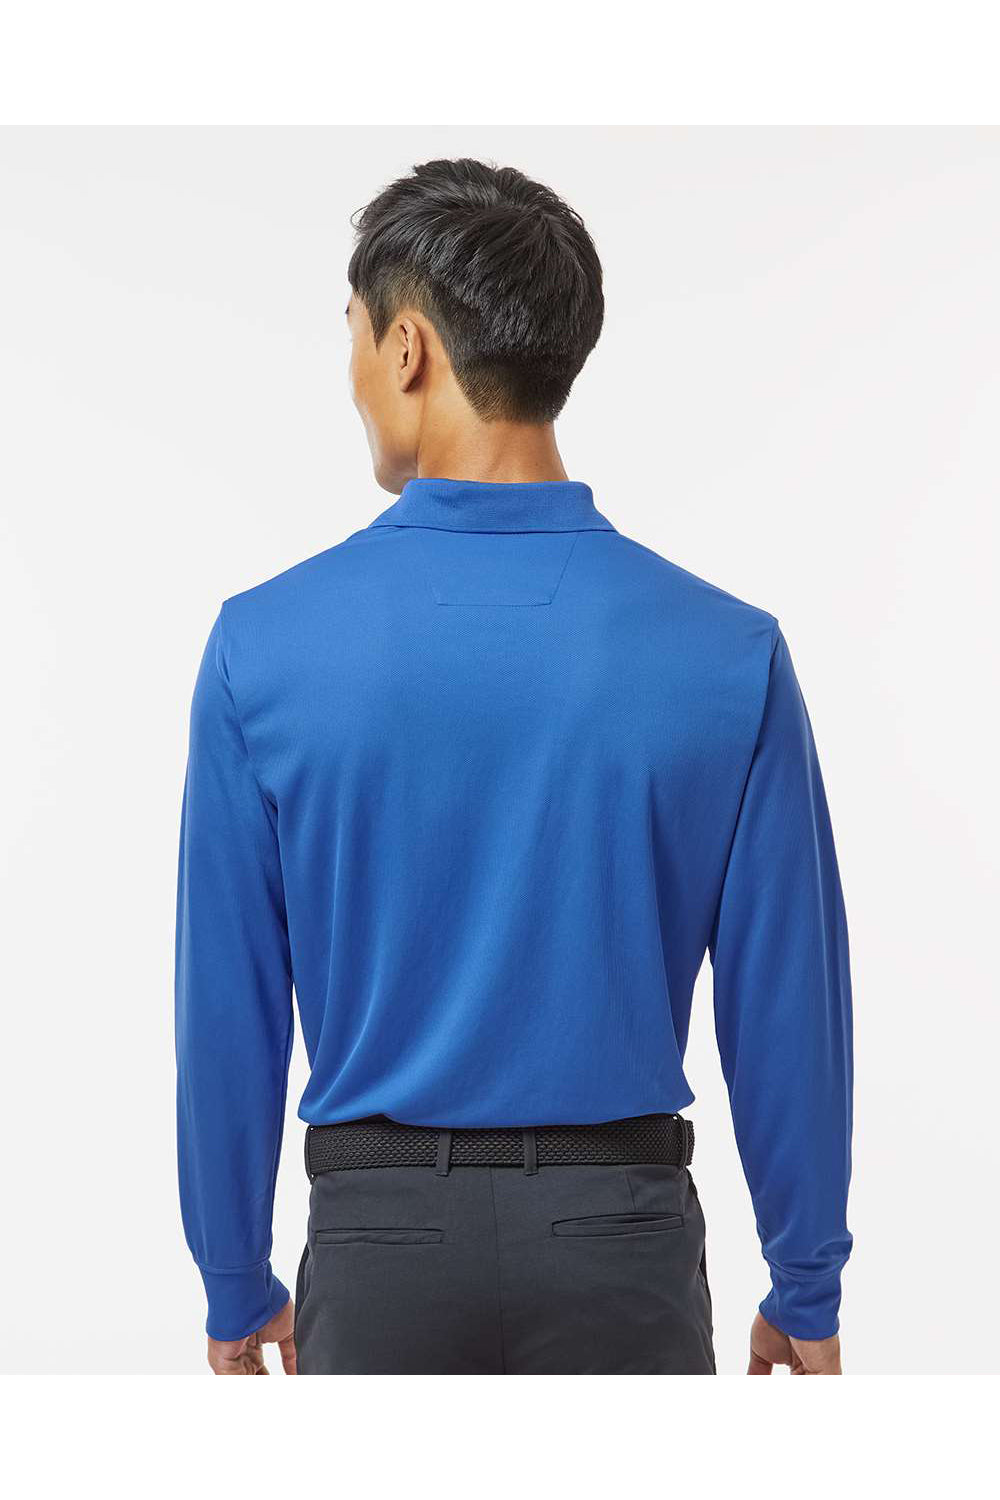 Paragon 110 Mens Prescott Long Sleeve Polo Shirt Royal Blue Model Back